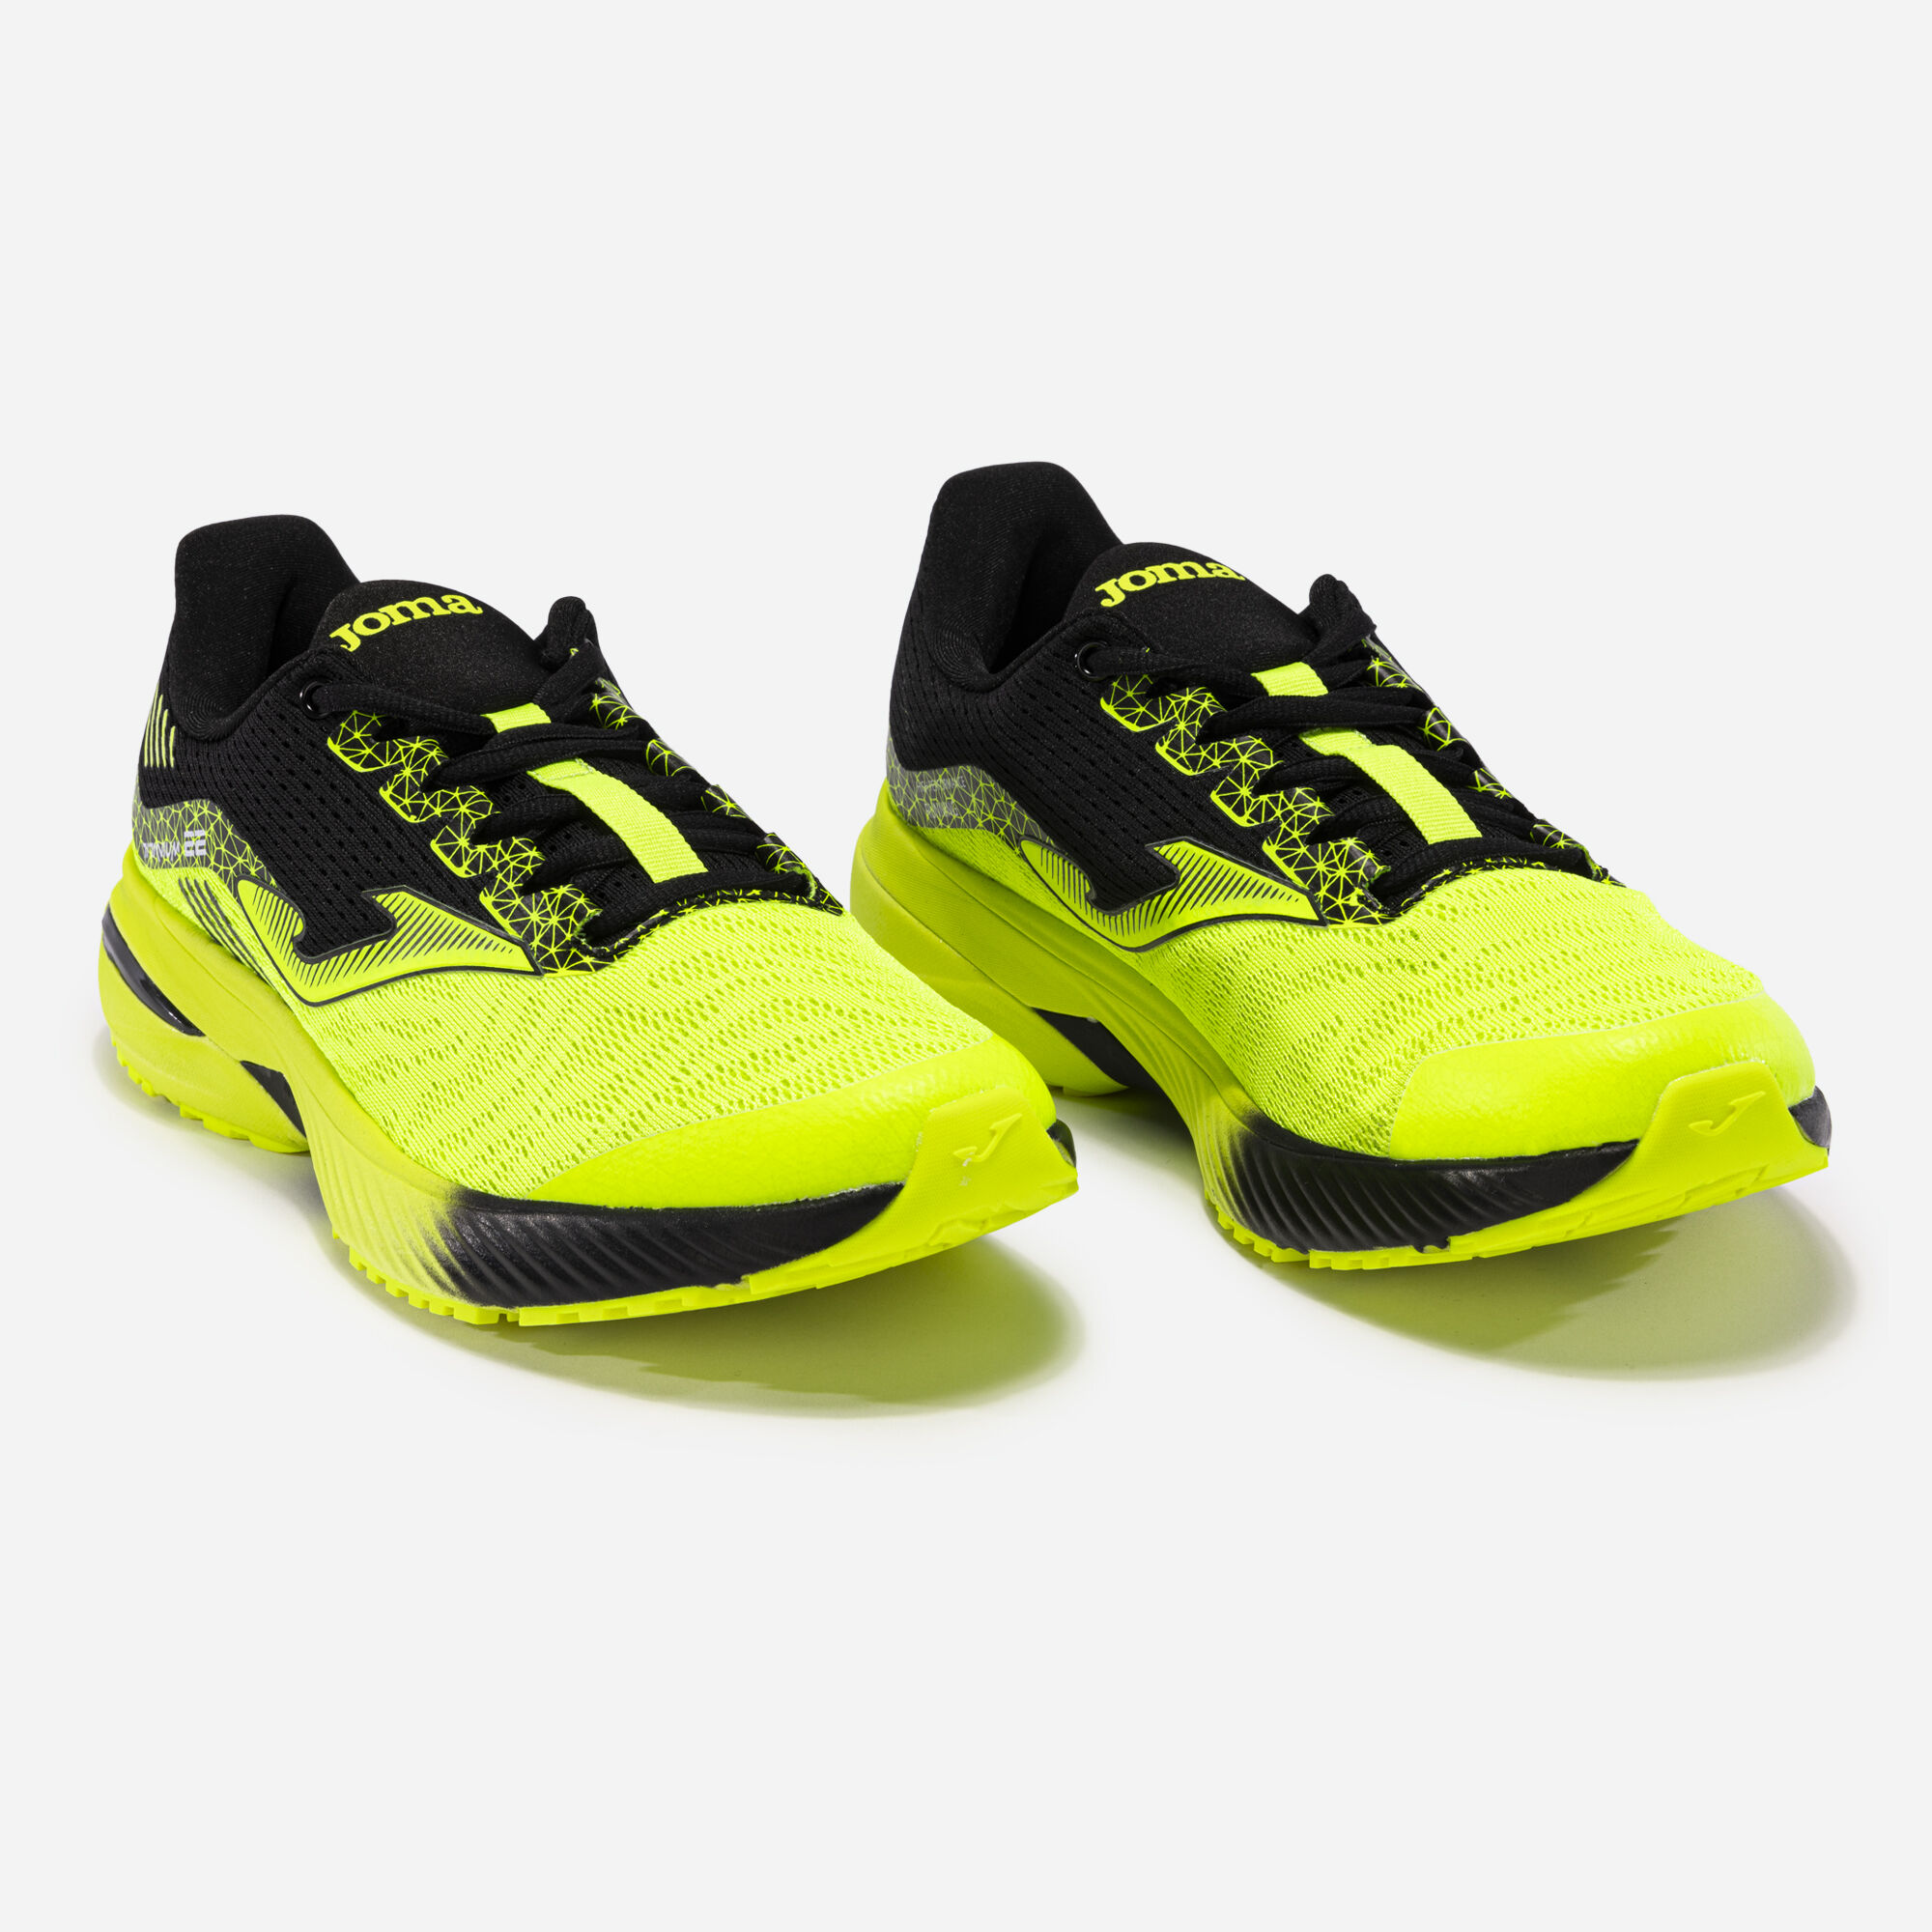 Pantofi sport alergare Titanium 23 bărbaȚi galben fosforescent negru